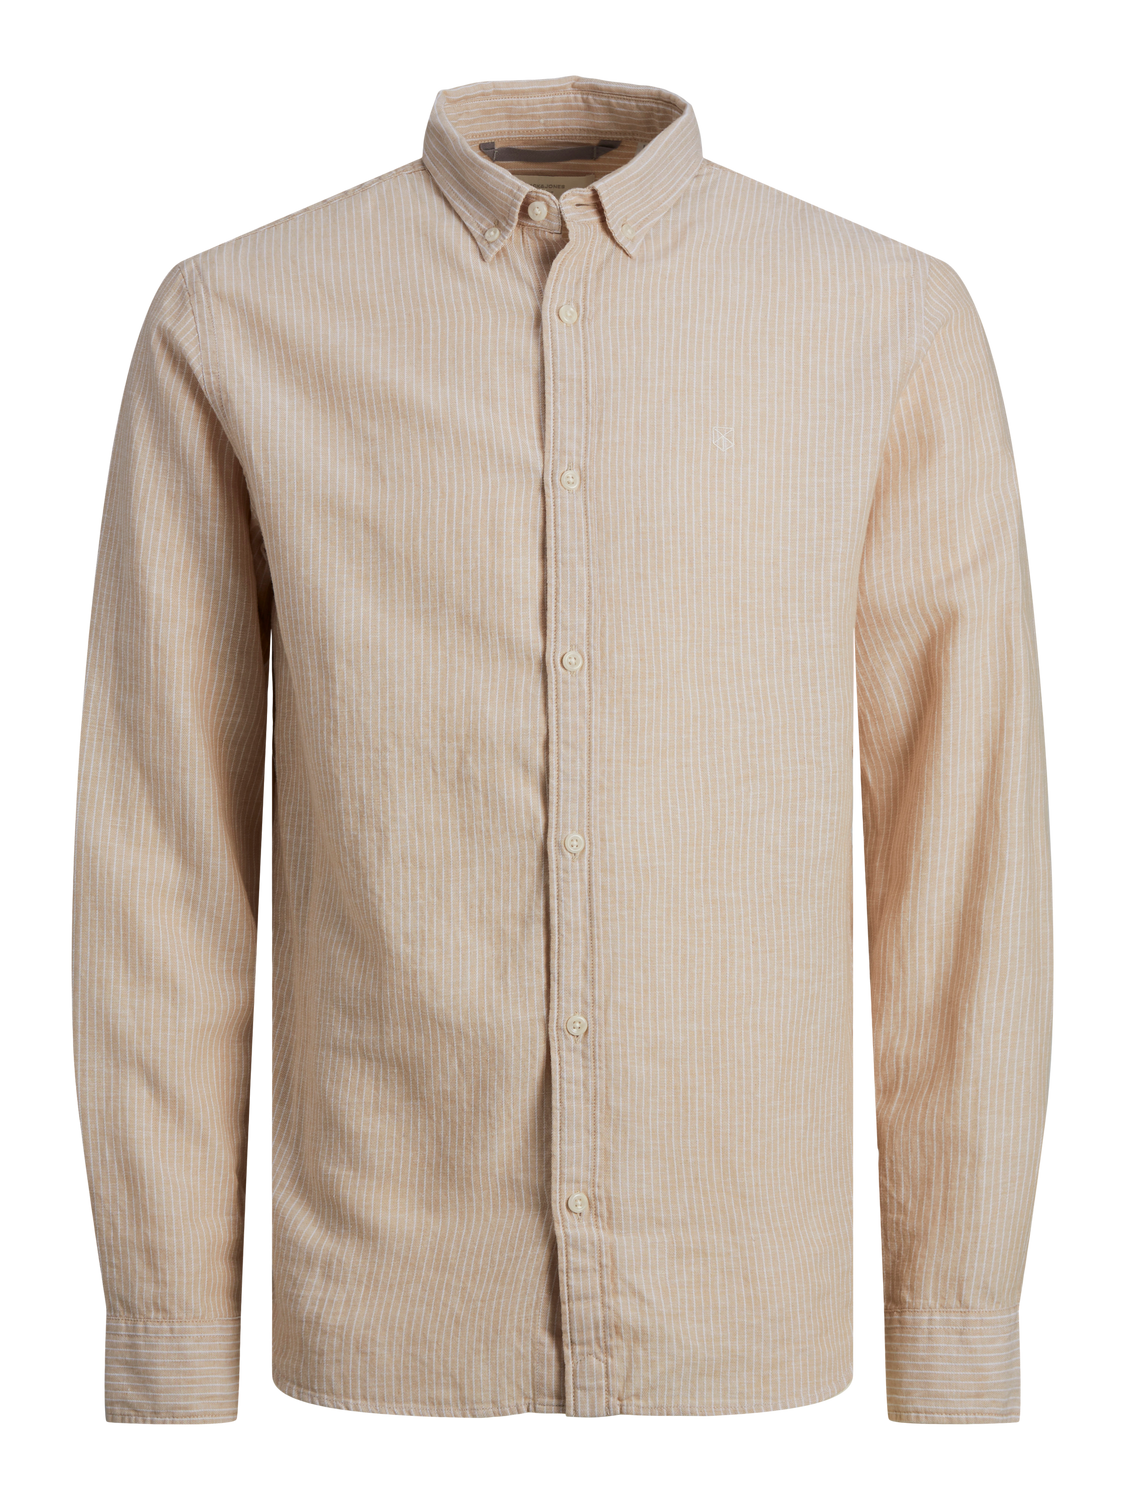 Jack & Jones Comfort Fit Shirt -Sand - 12251024